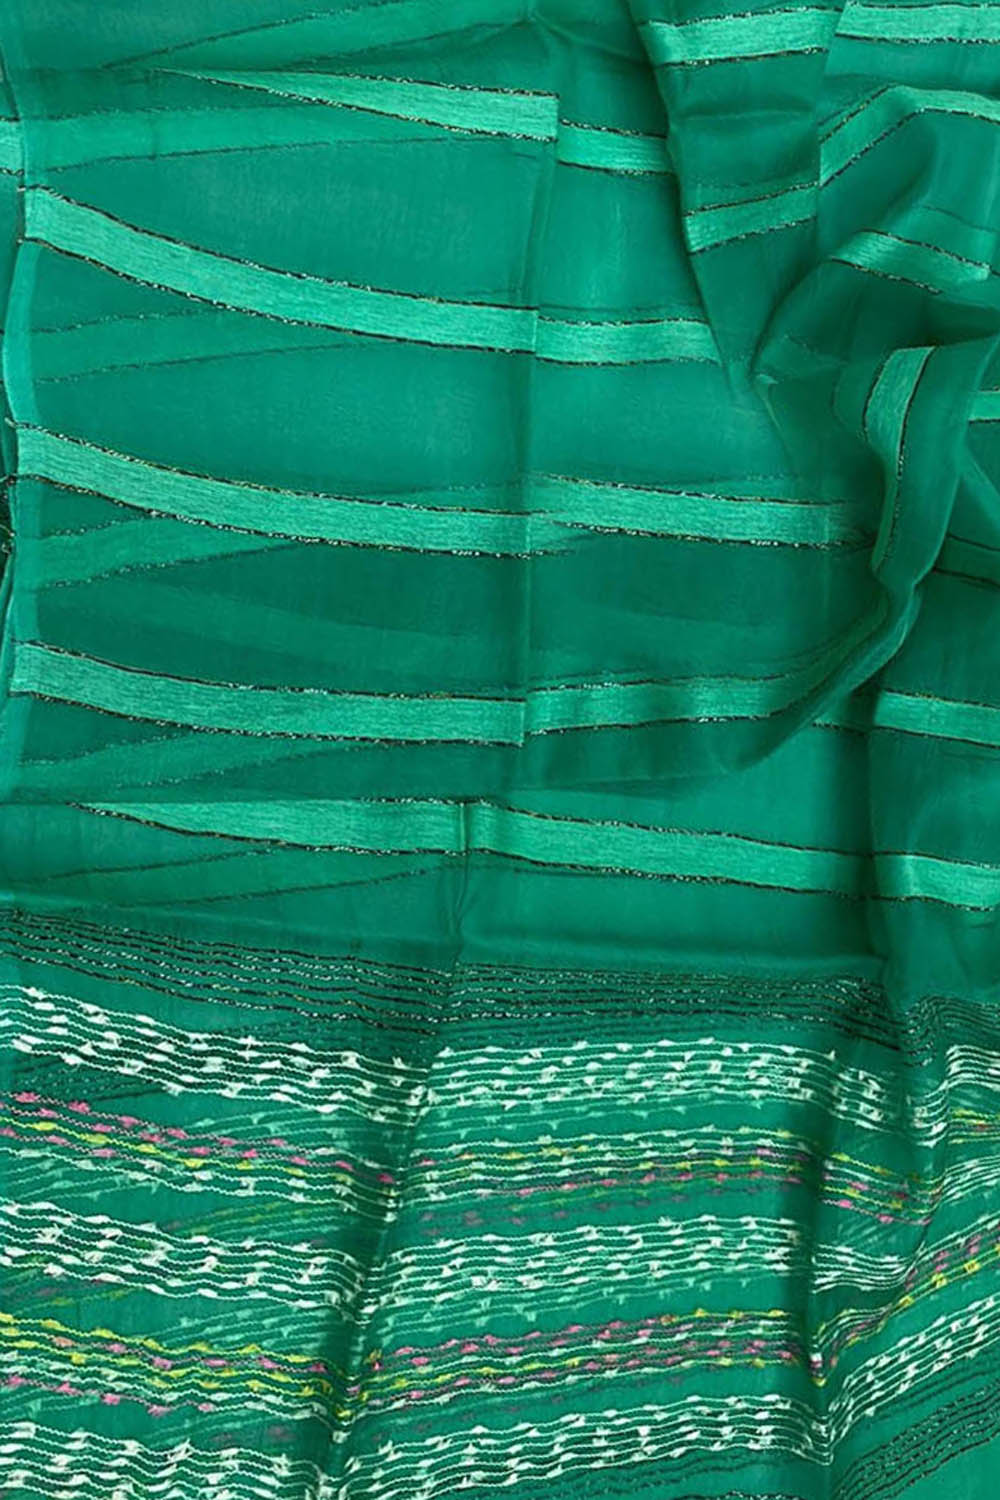 Shop Green Bhagalpur Pure Tussar Silk Dupatta - Premium Quality | Buy Now! - Luxurion World